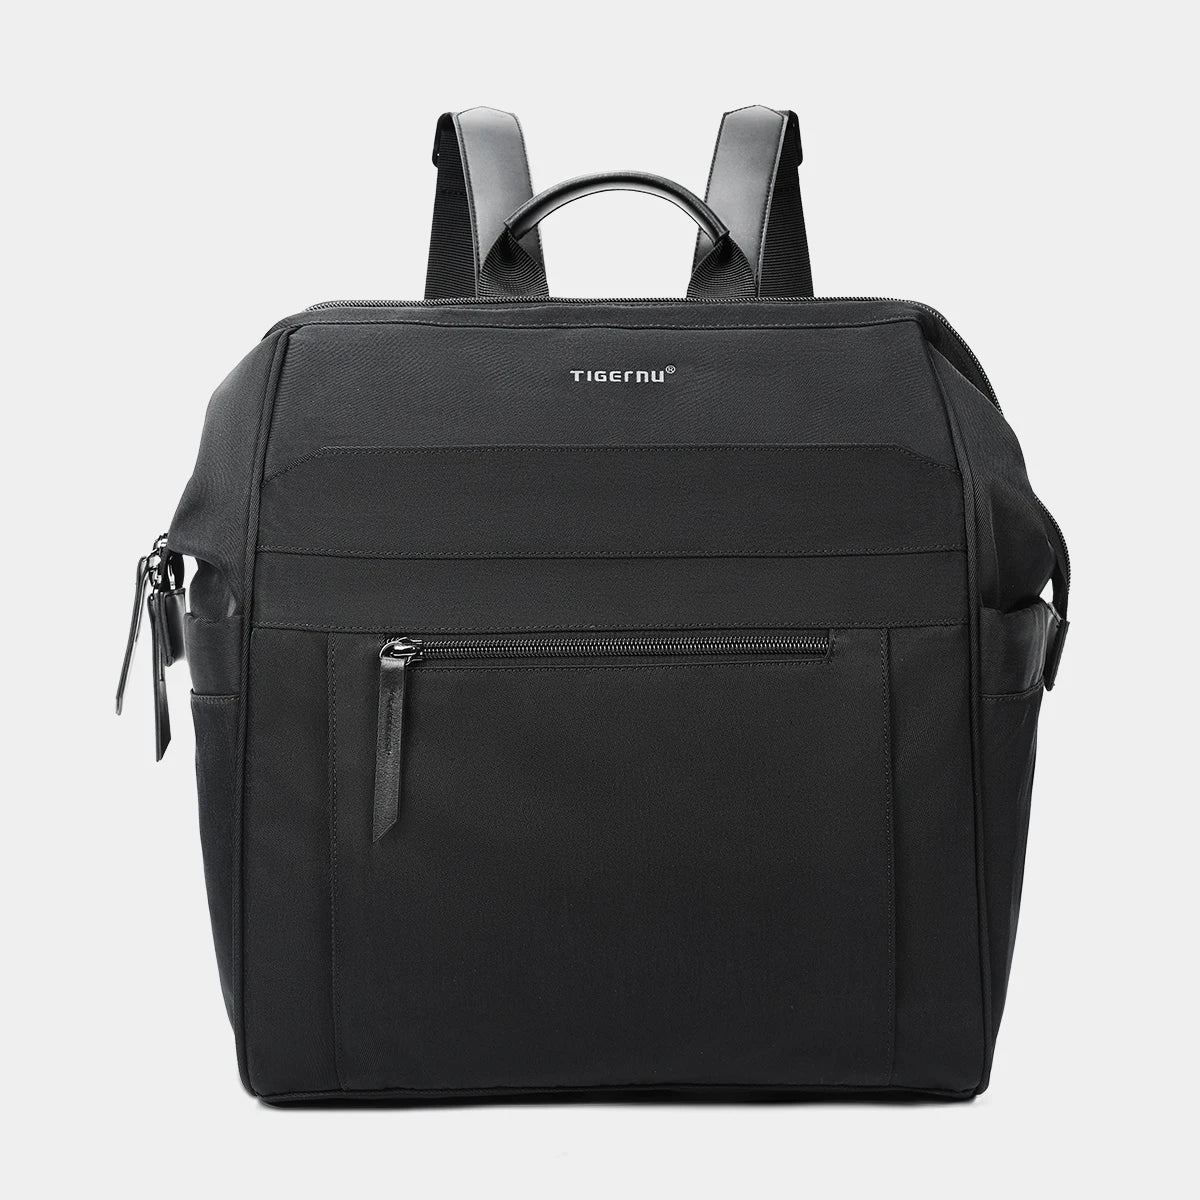 Tigernu Large Capacity Shockproof Laptop Bag Multifunctional Black